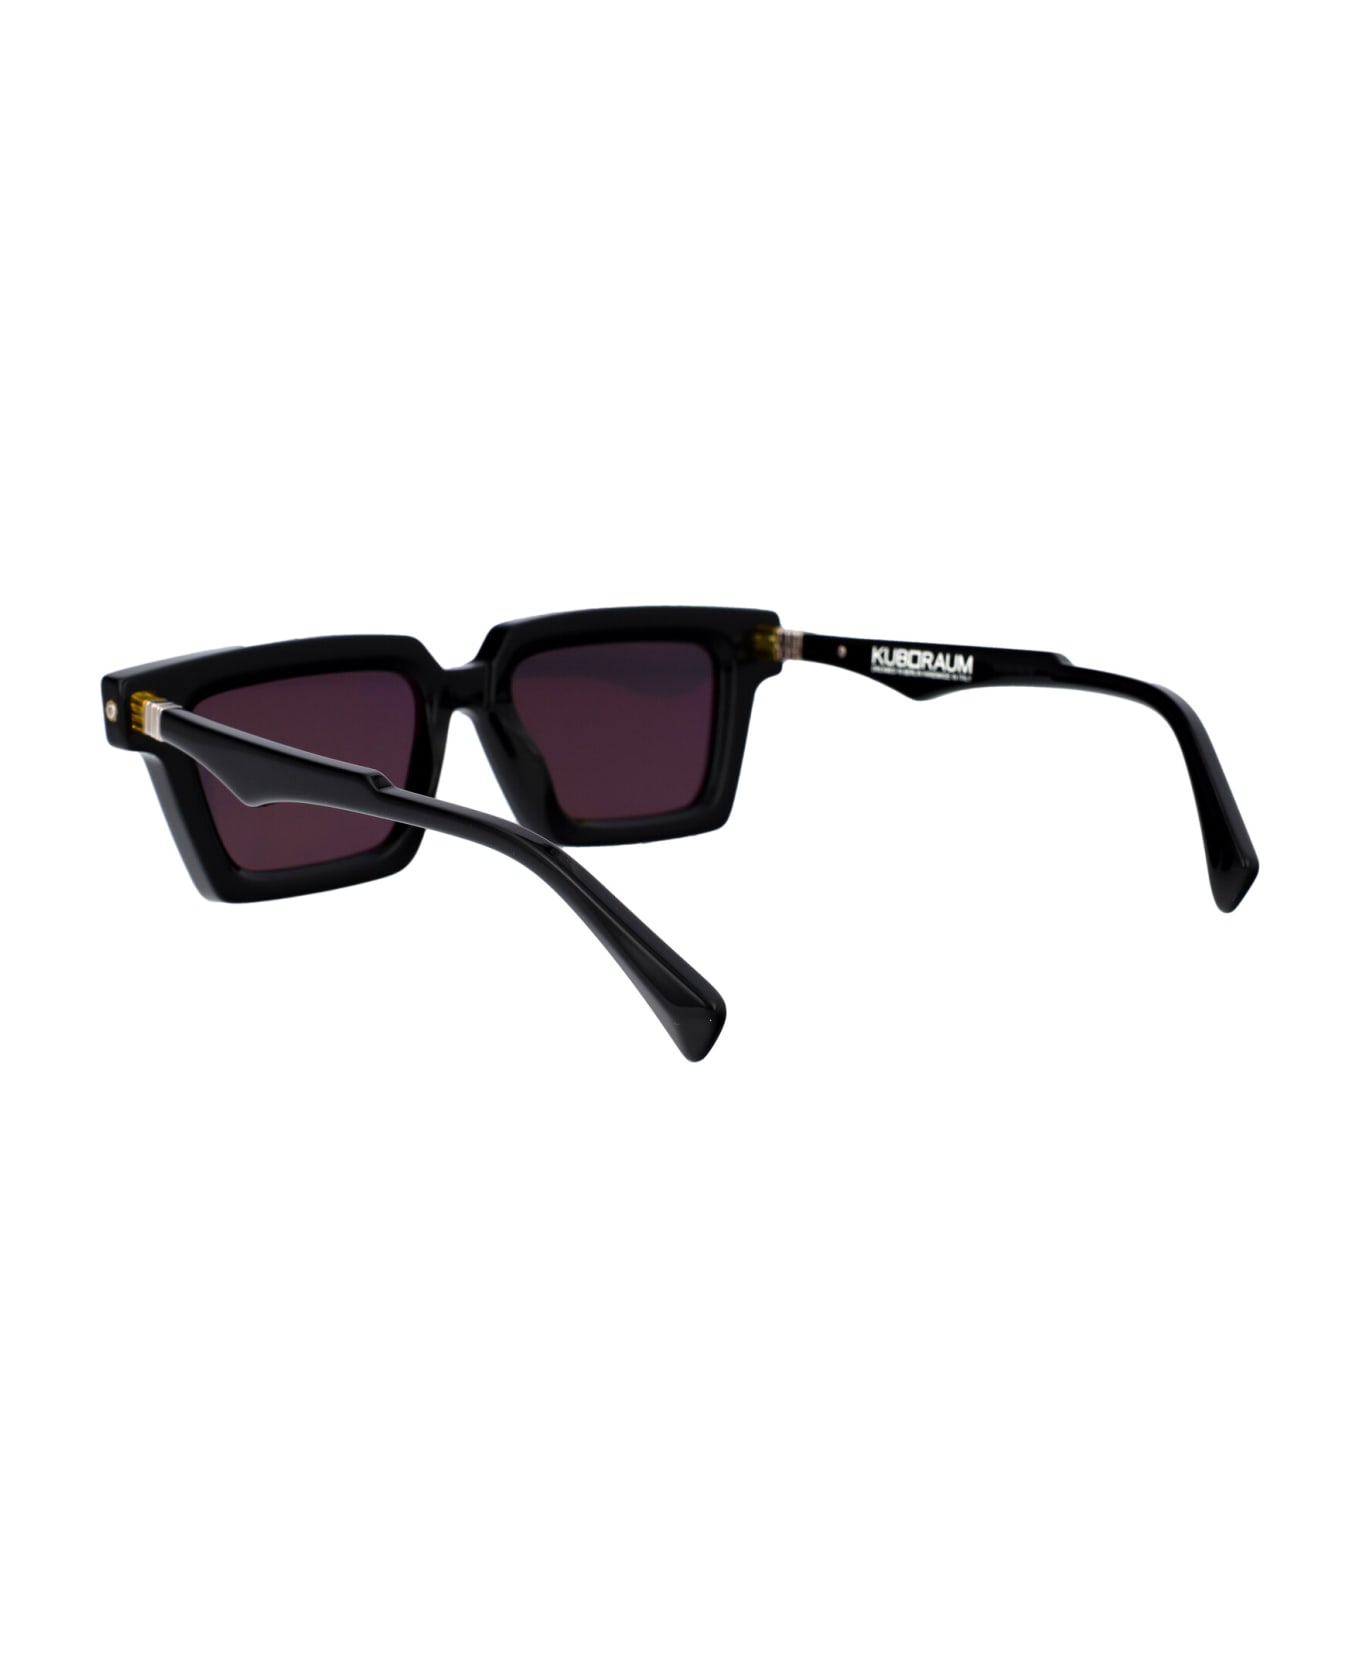 Kuboraum Maske Q2 Sunglasses - BSY 2grey サングラス